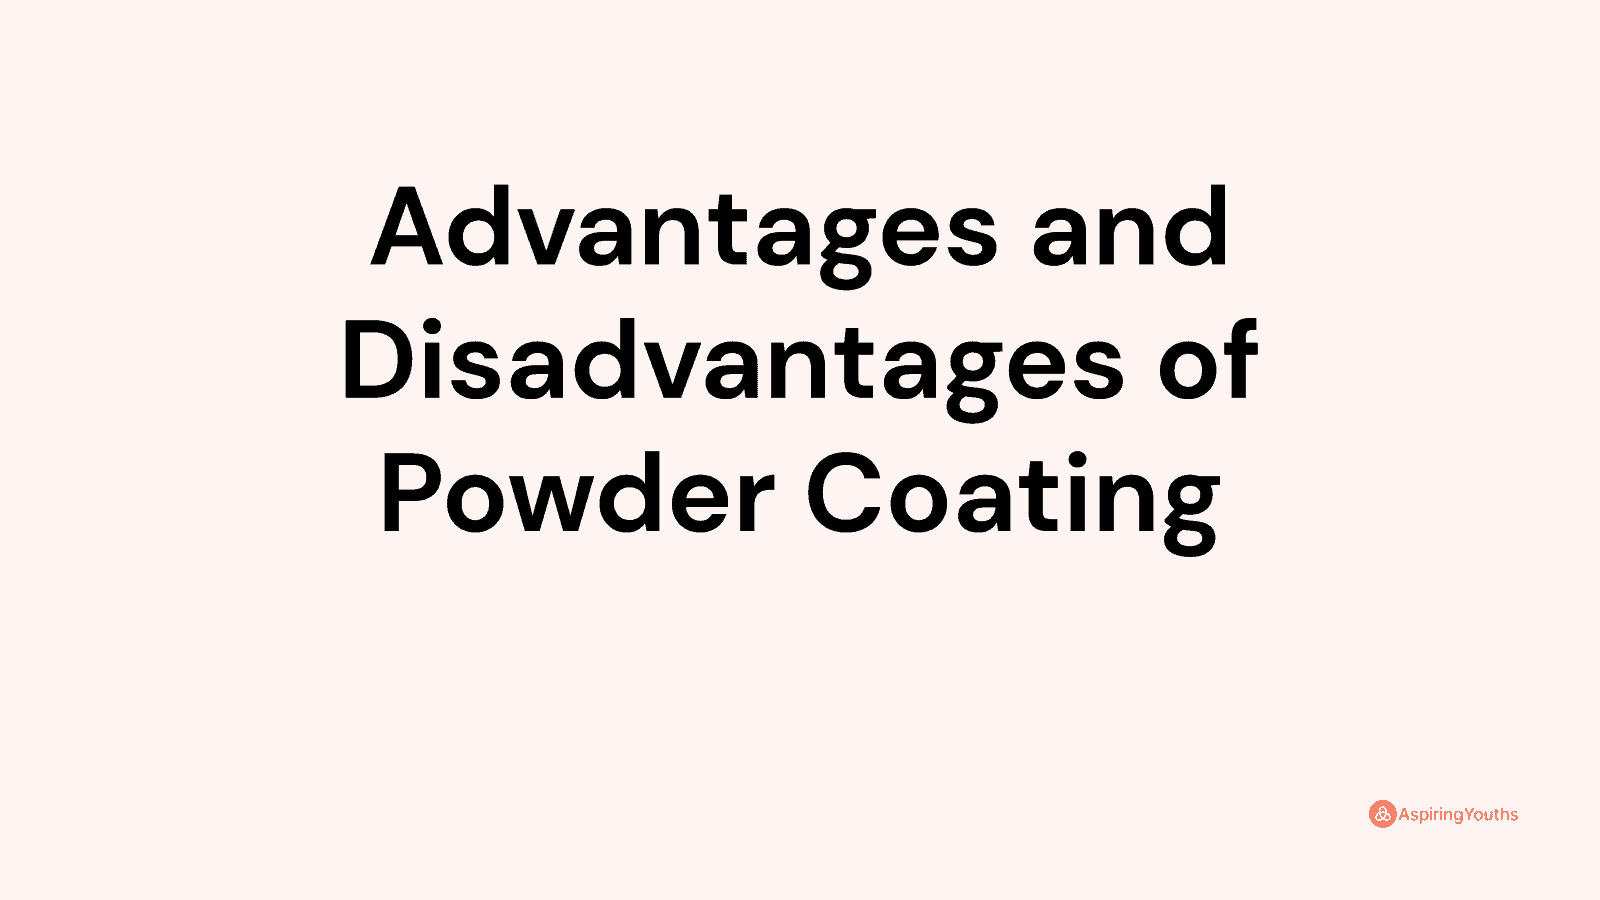 Advantages and disadvantages of Powder Coating